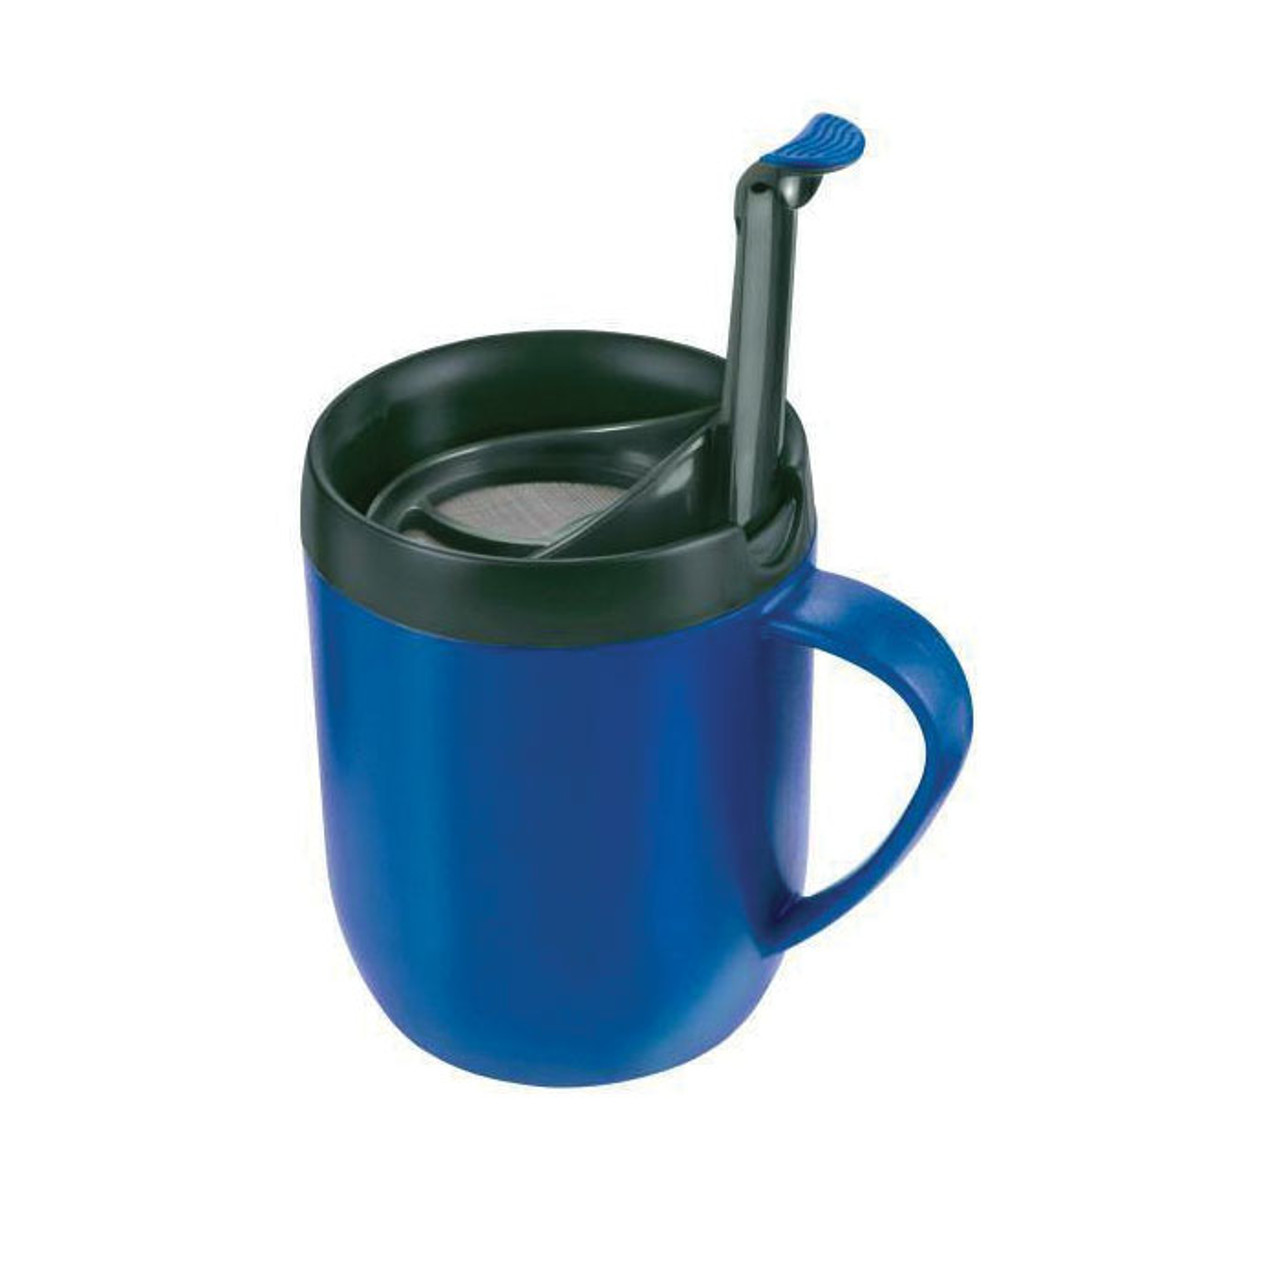 Zyliss Blue Hot Coffee Mug Cafetiere Flask